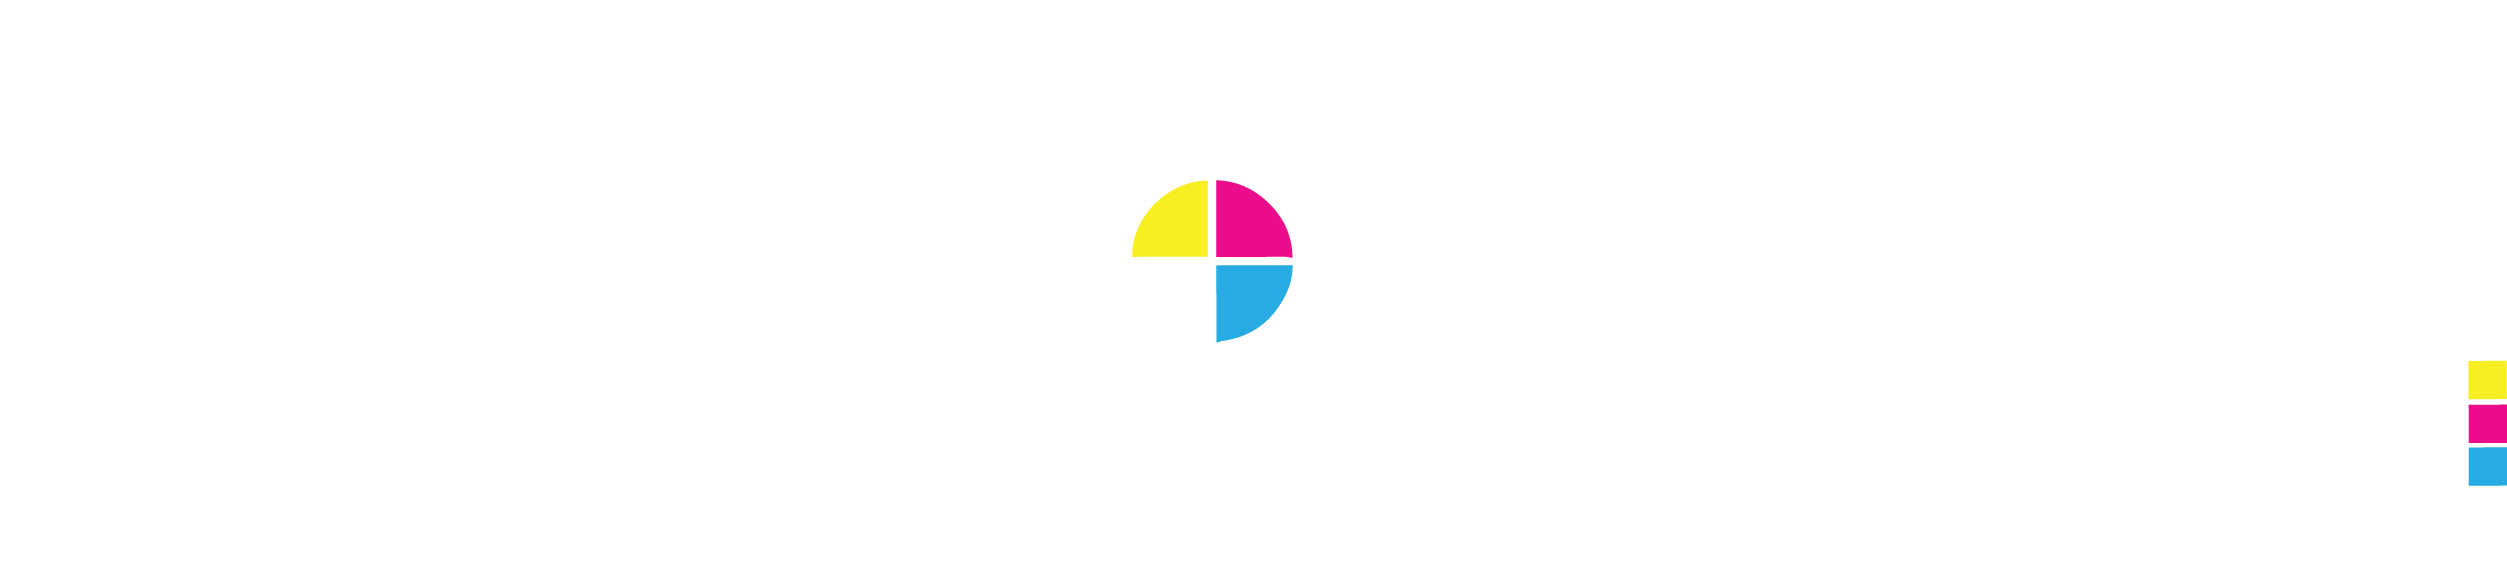 logo elipower